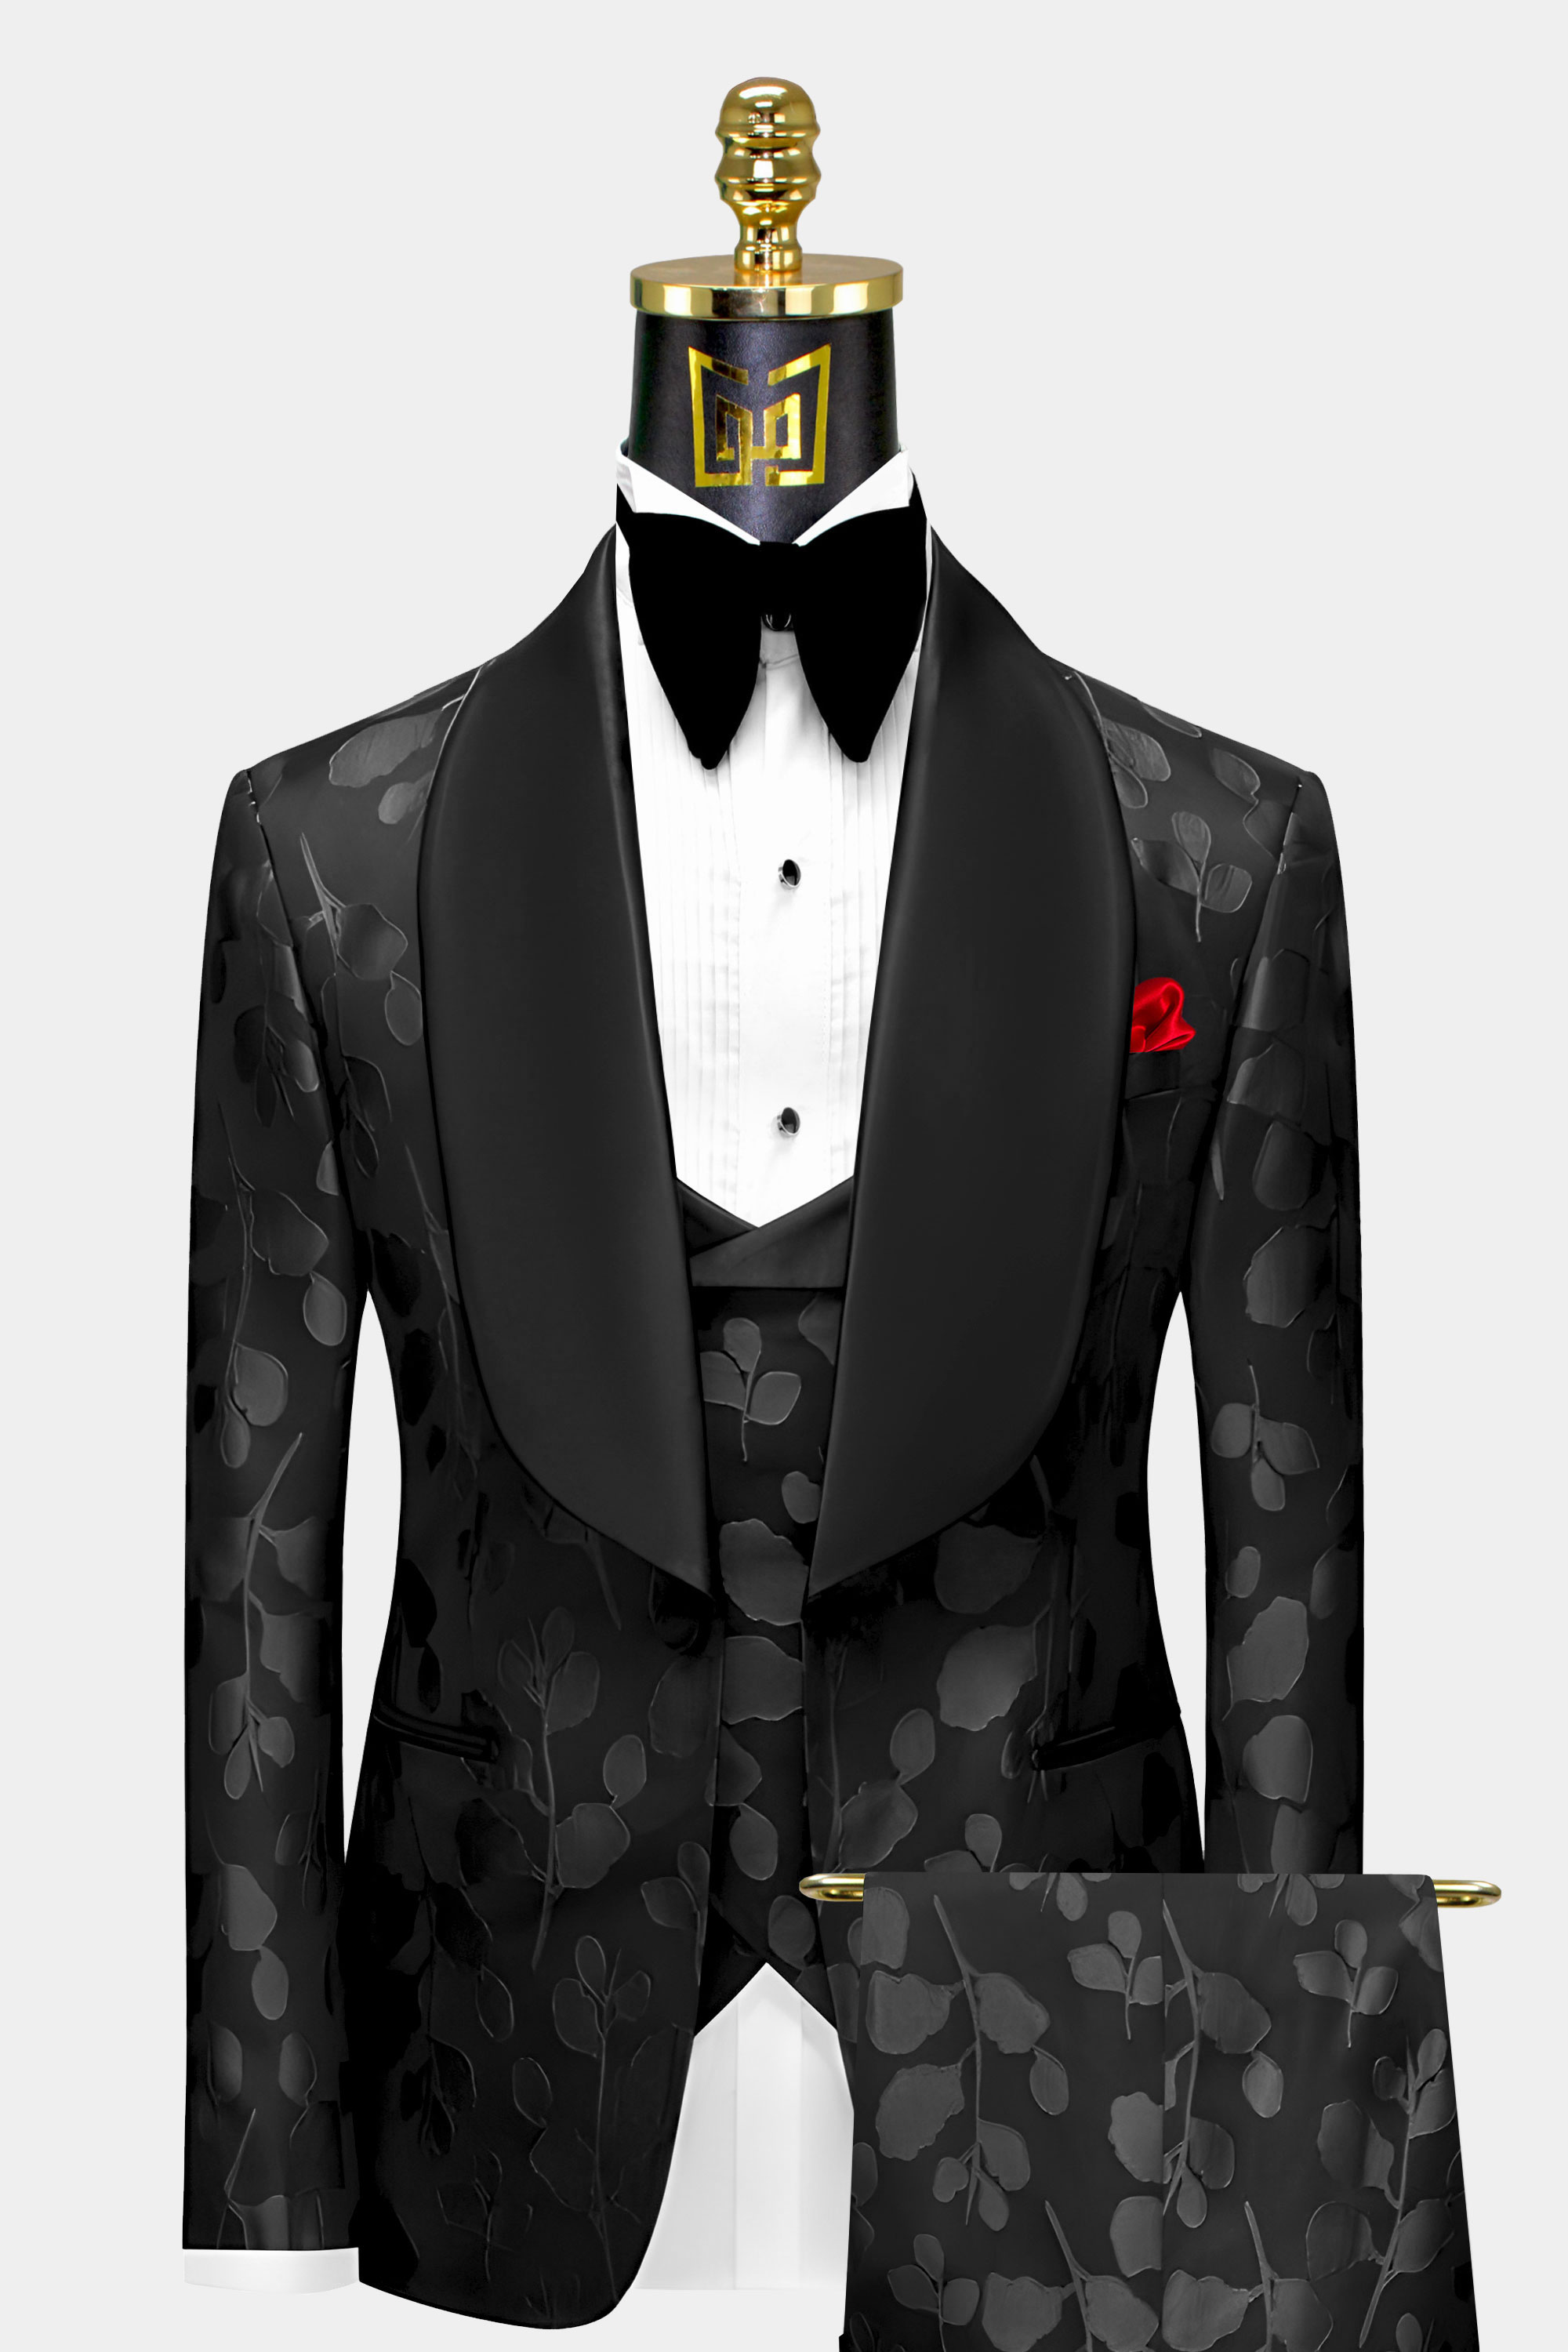 Black on Black Tuxedo Suit